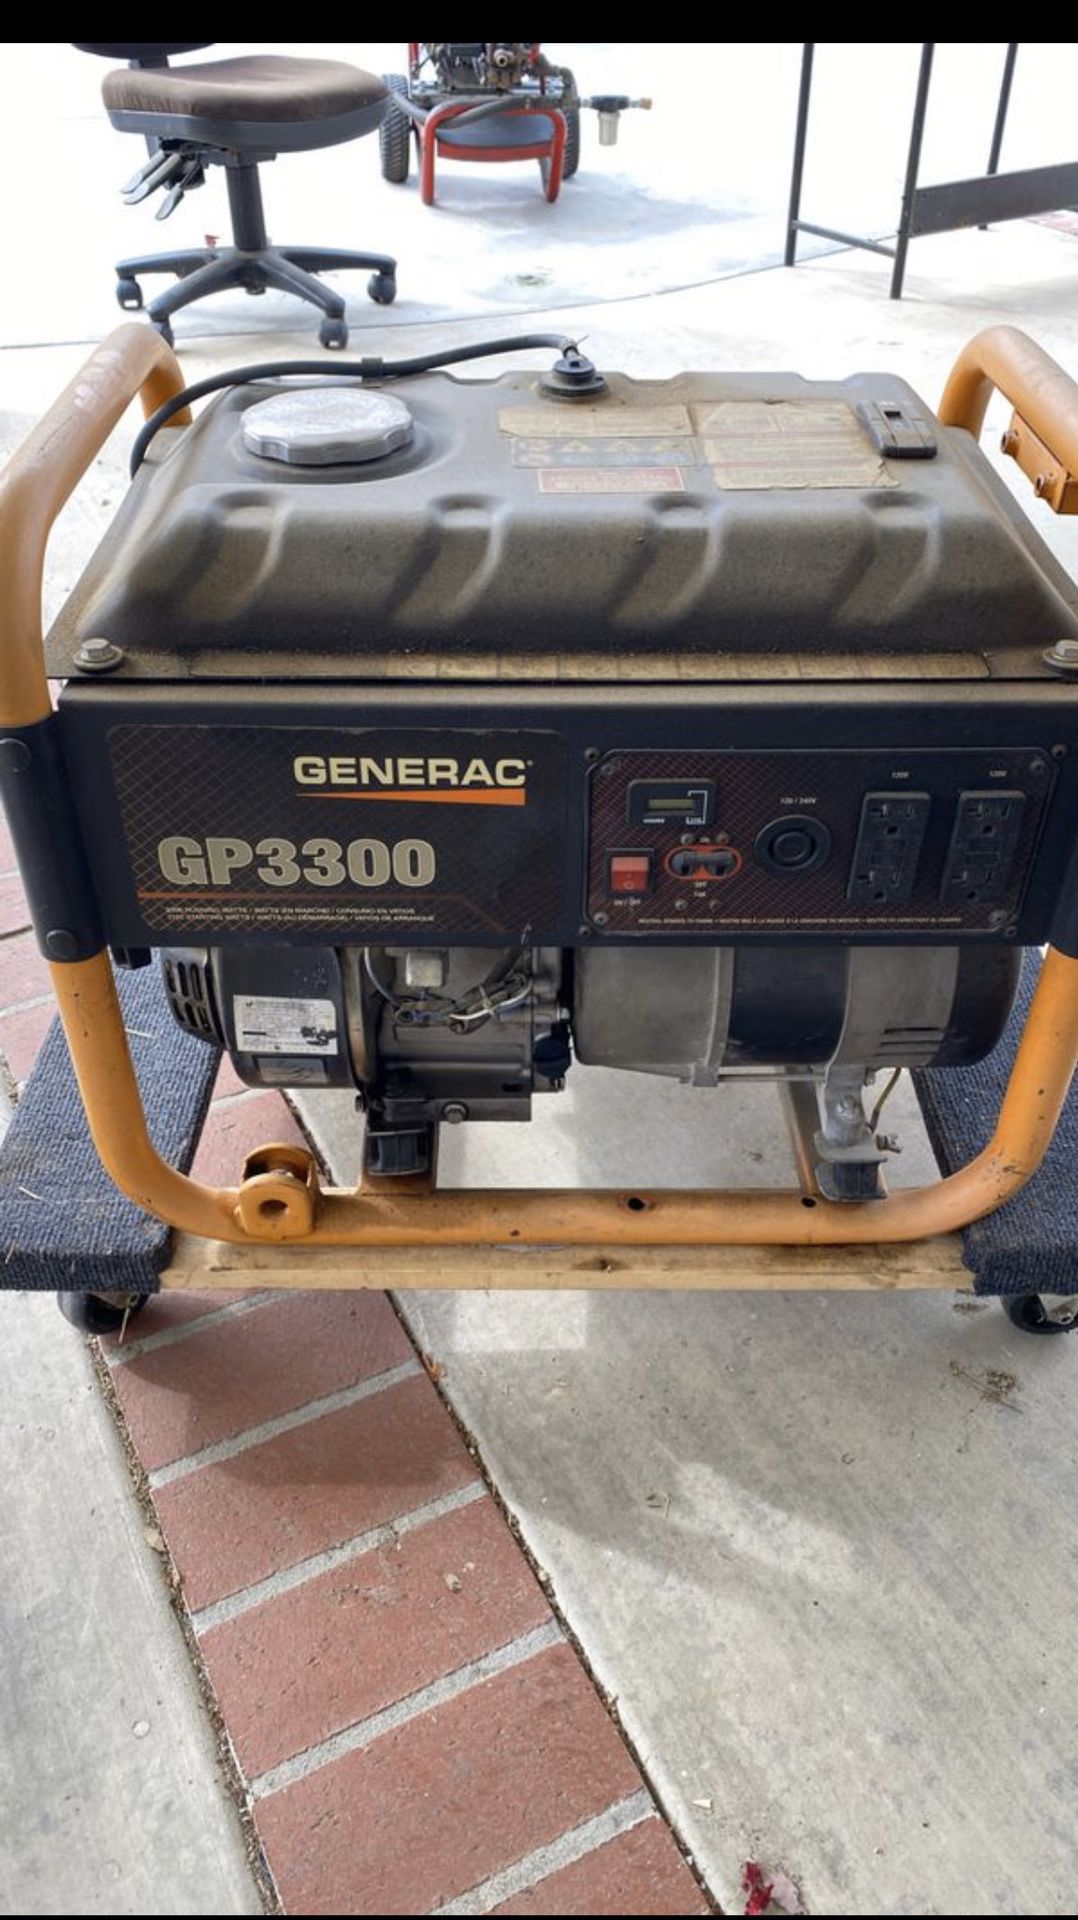 Generac portable generator